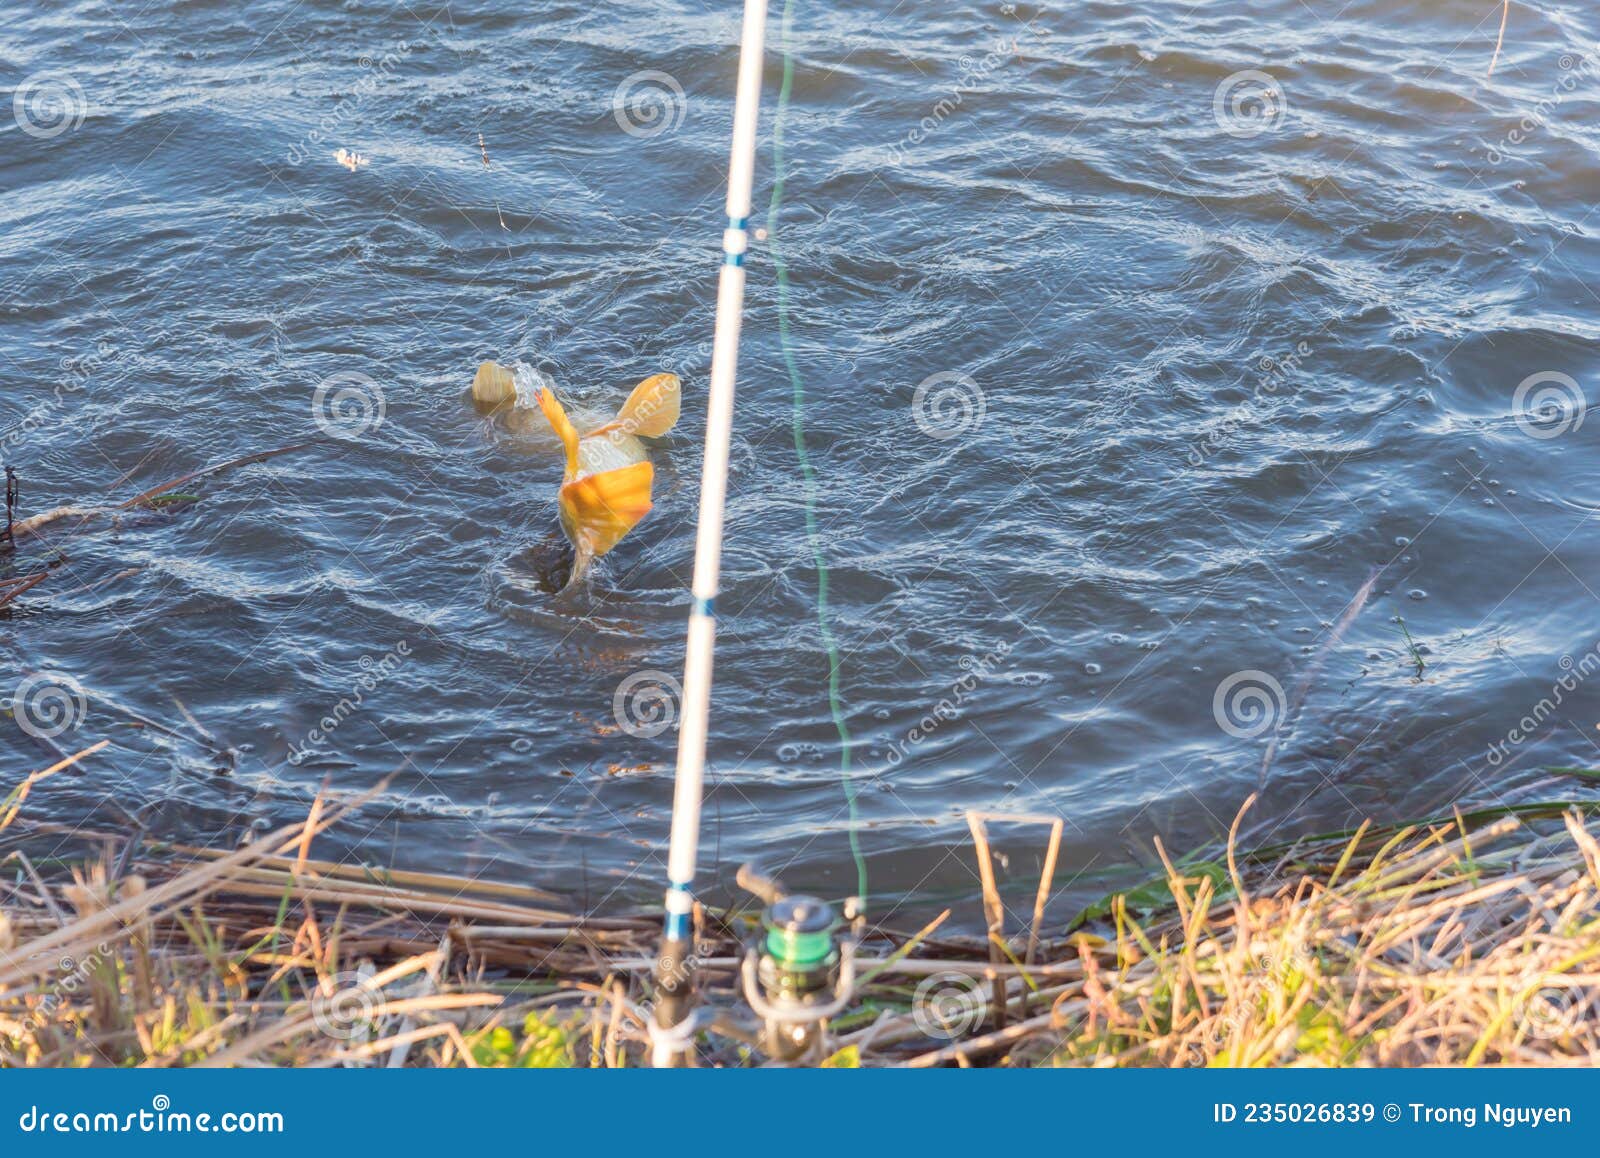 https://thumbs.dreamstime.com/z/selective-focus-fishing-pole-large-common-carp-hook-sweet-corn-bait-shallow-dof-bank-european-cyprinus-carpio-235026839.jpg